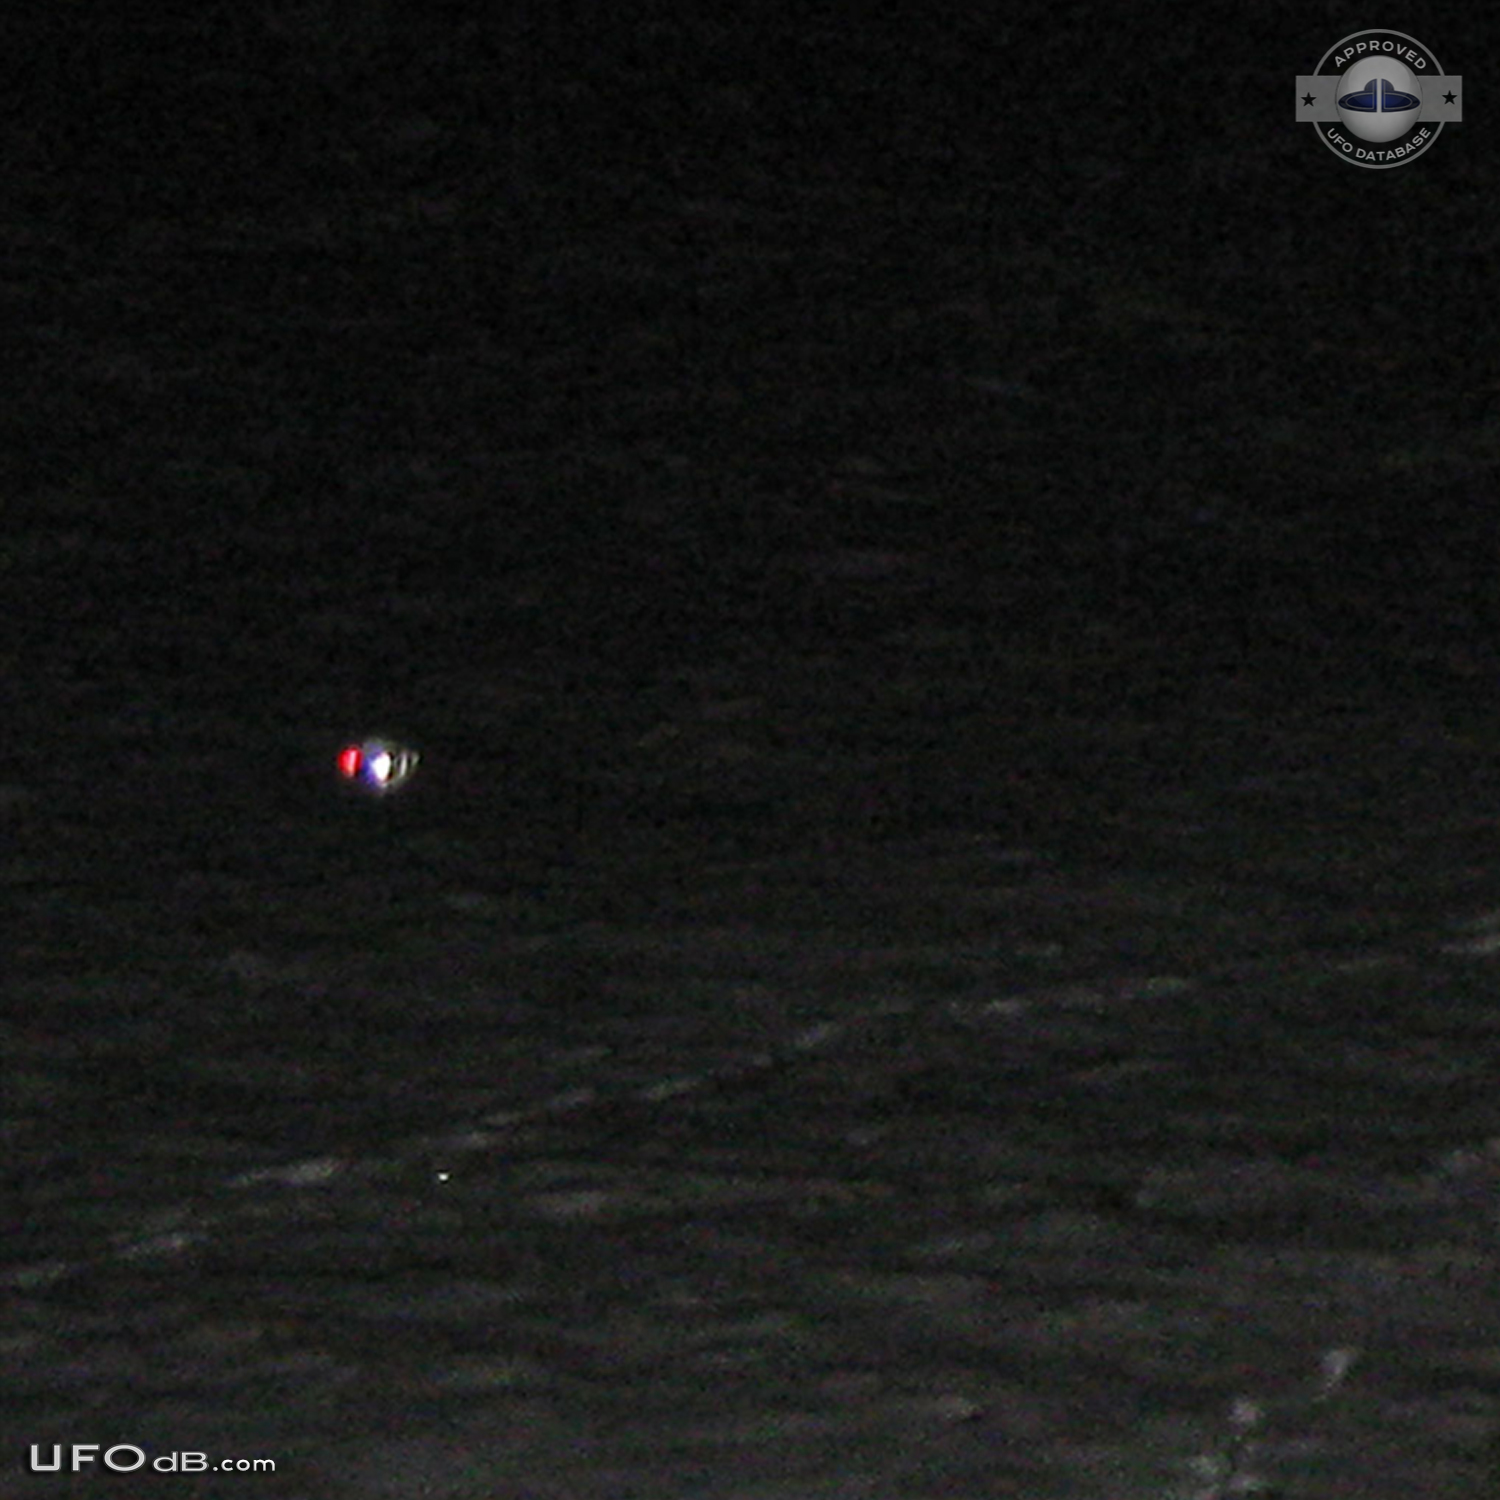 Probe UFO near the snow touching it - Kansas City, Missouri - 2012 UFO Picture #415-2